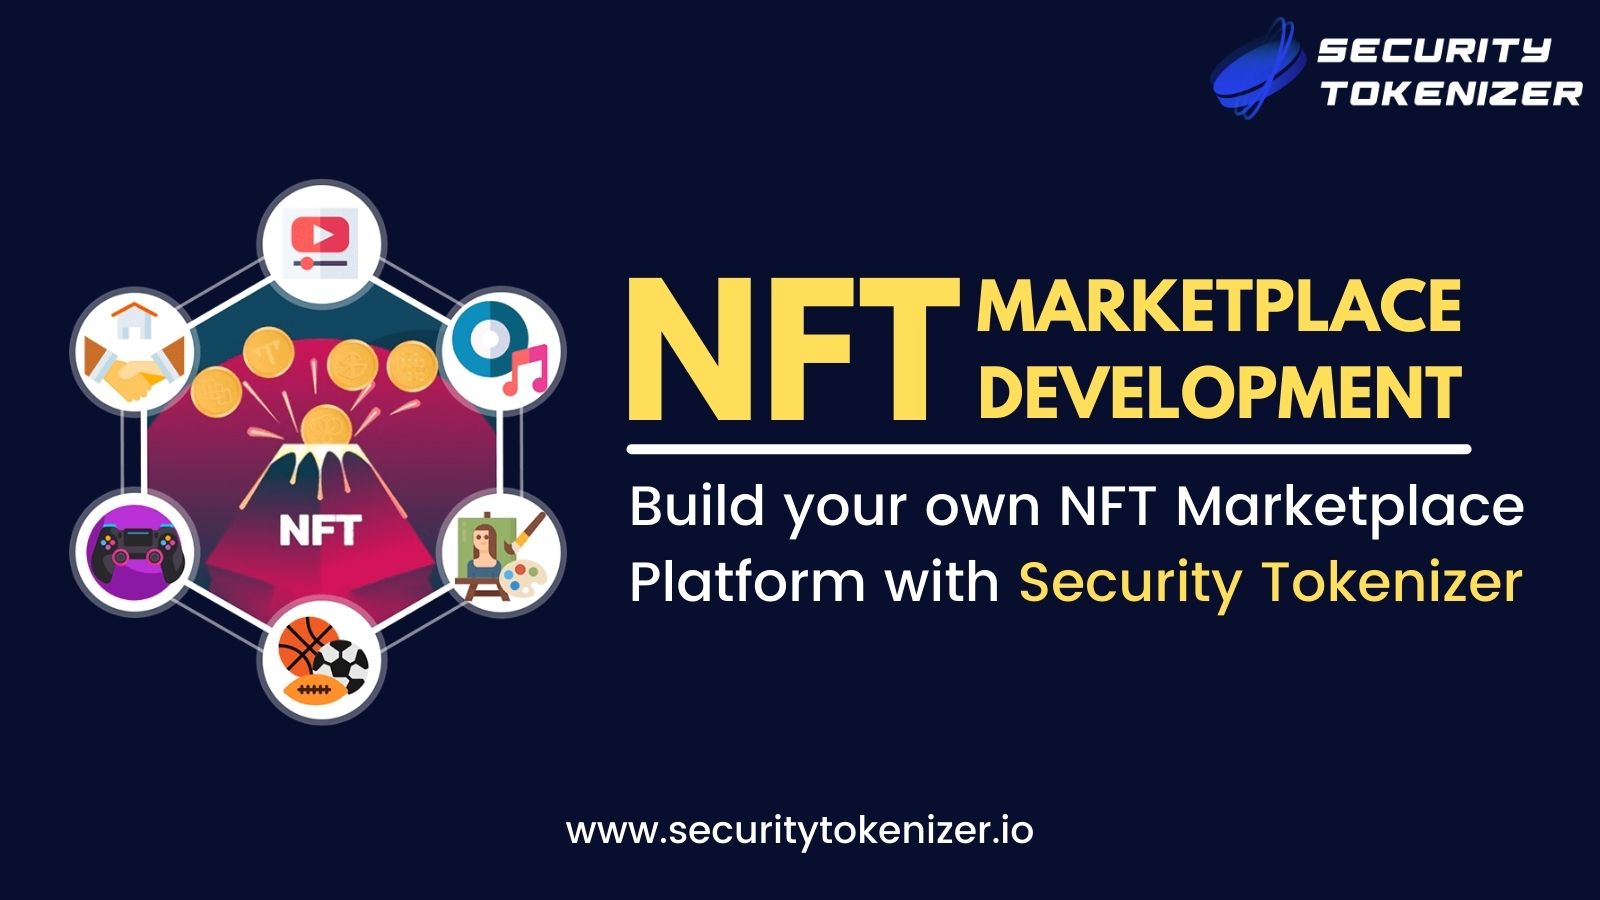 Article about NFT Marketplace Development Company - Security Tokenizer